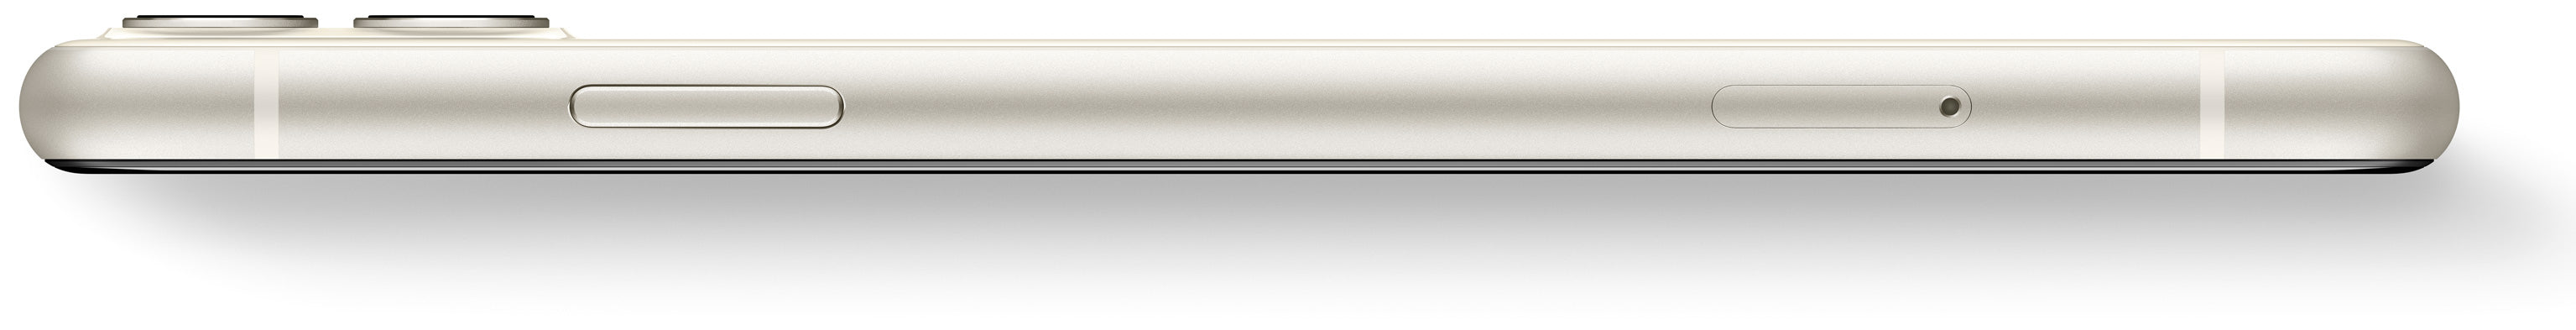 Apple iPhone 11 64gb White EU - 10